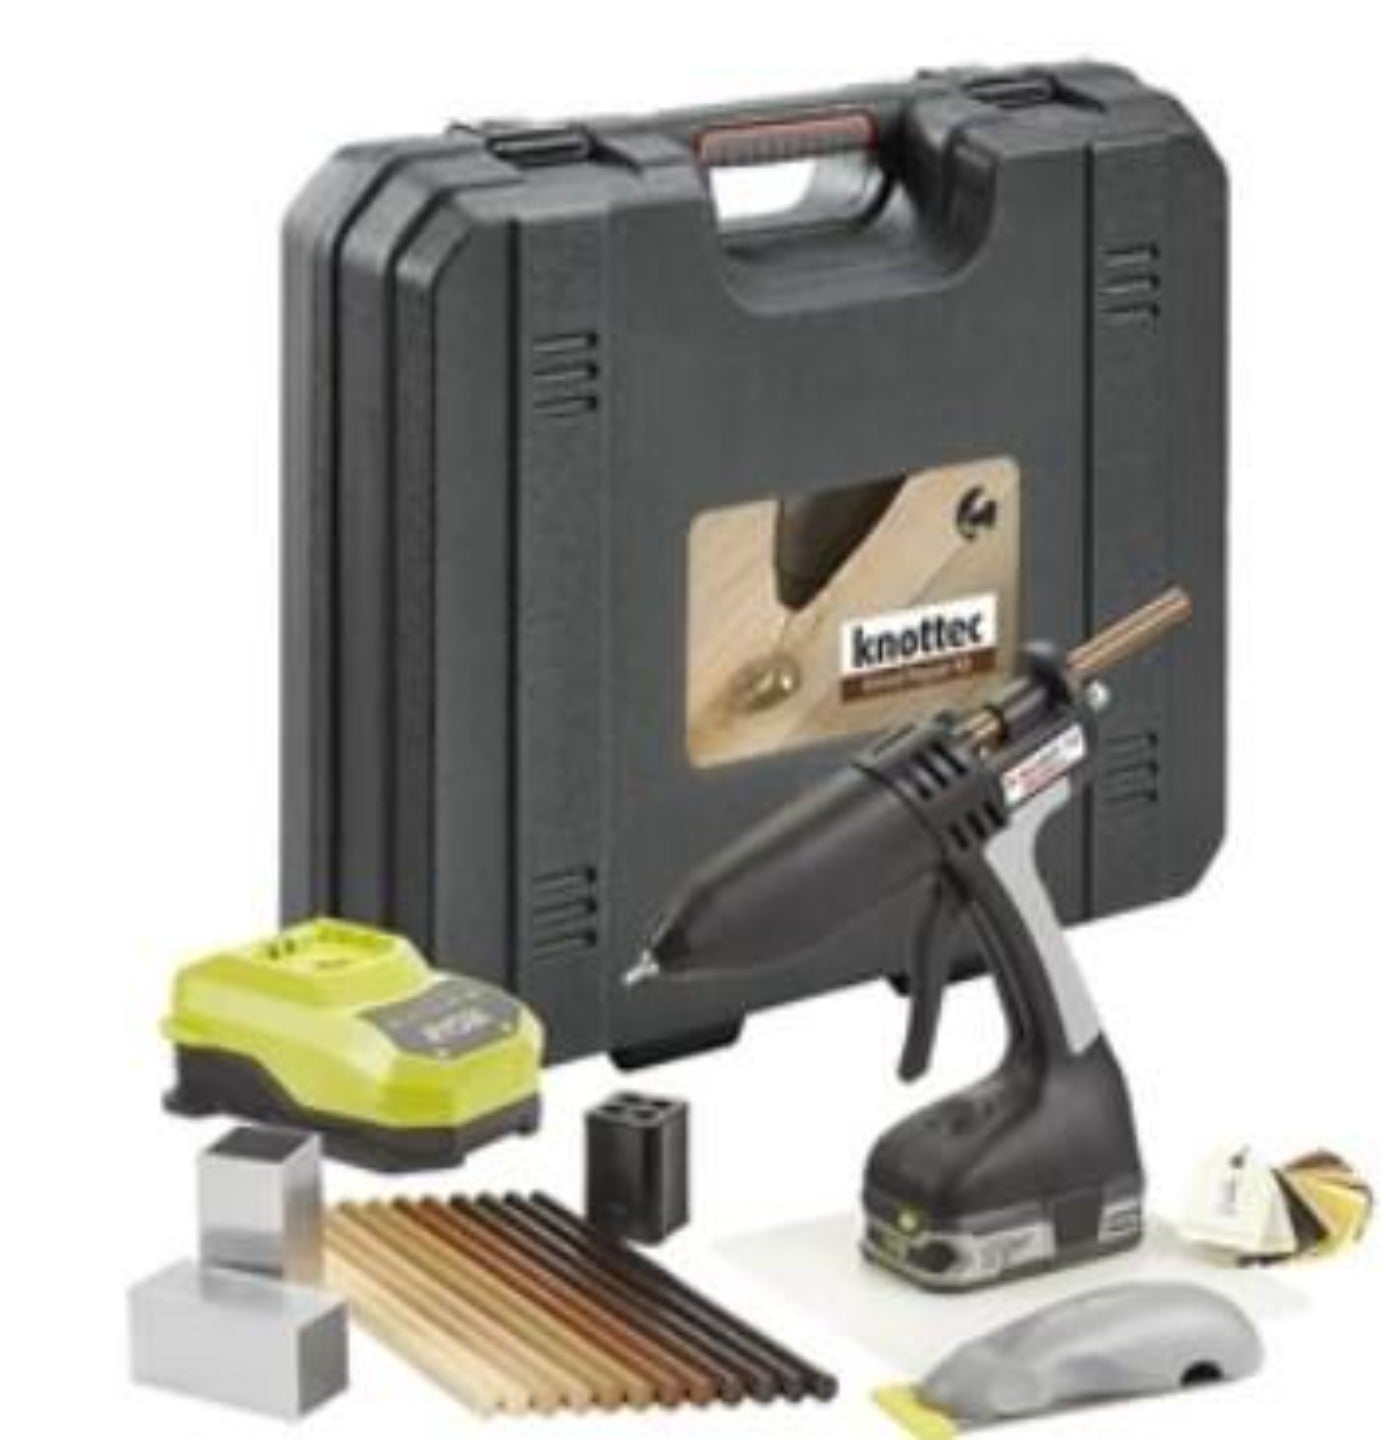 Knottec Pro Wood Repair Kit –